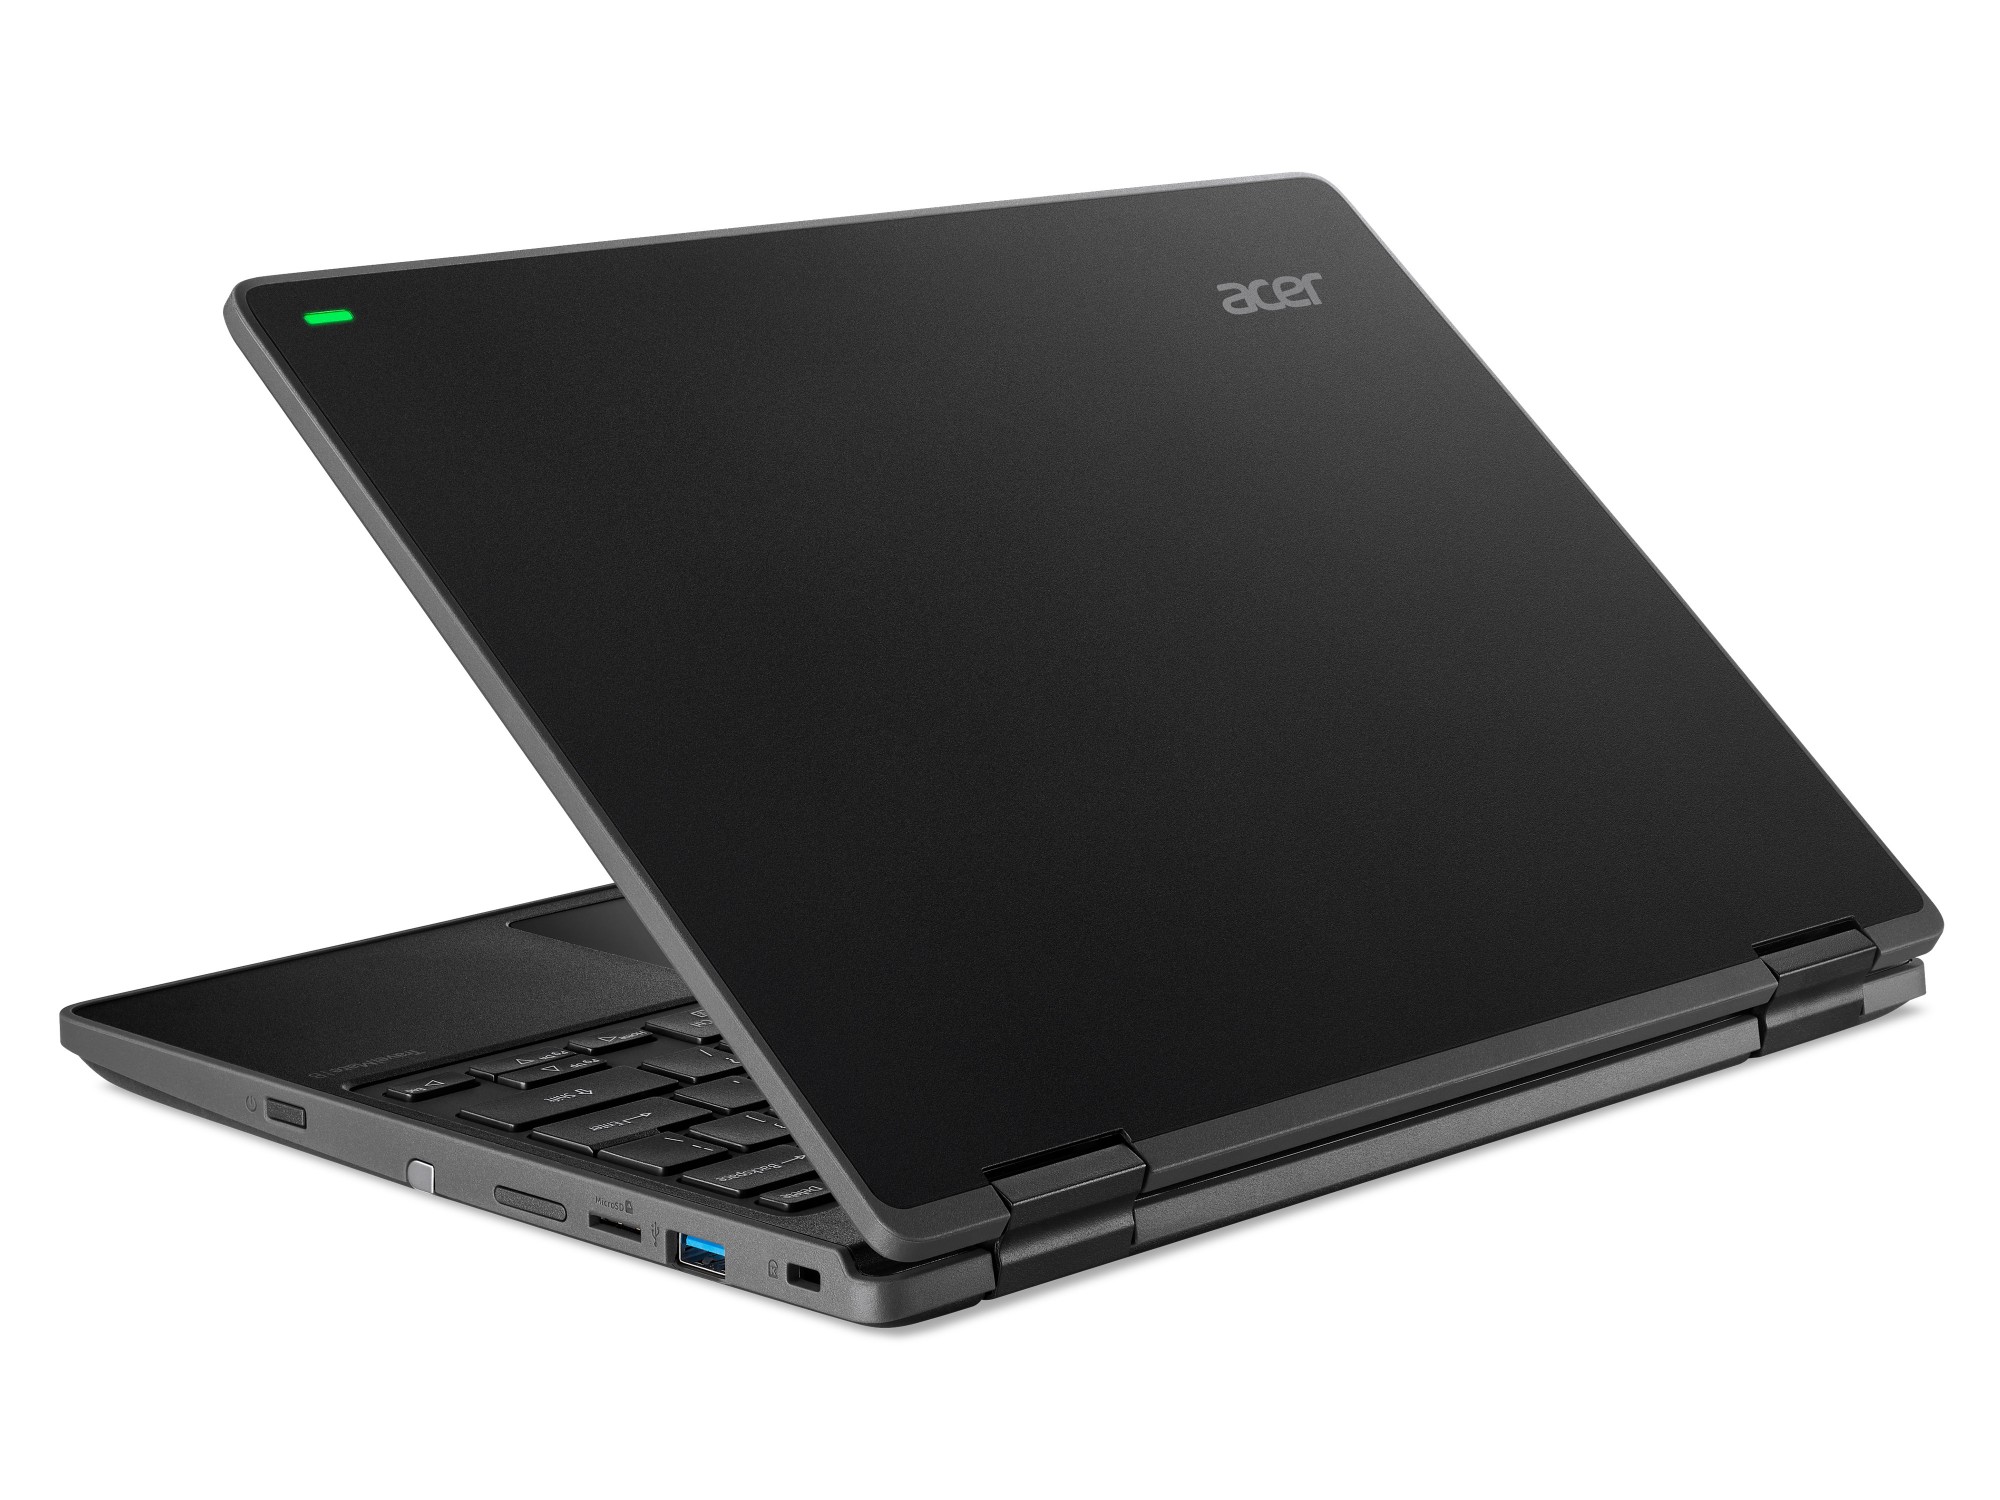 Acer TravelMate Spin B3 TMB311RN-32 PN6000 8GB/128GB W11SE Laptop 29.5 cm (11.6") Touchscreen Full HD Intel Pentium N N6000 SSD Windows 11 SE Black